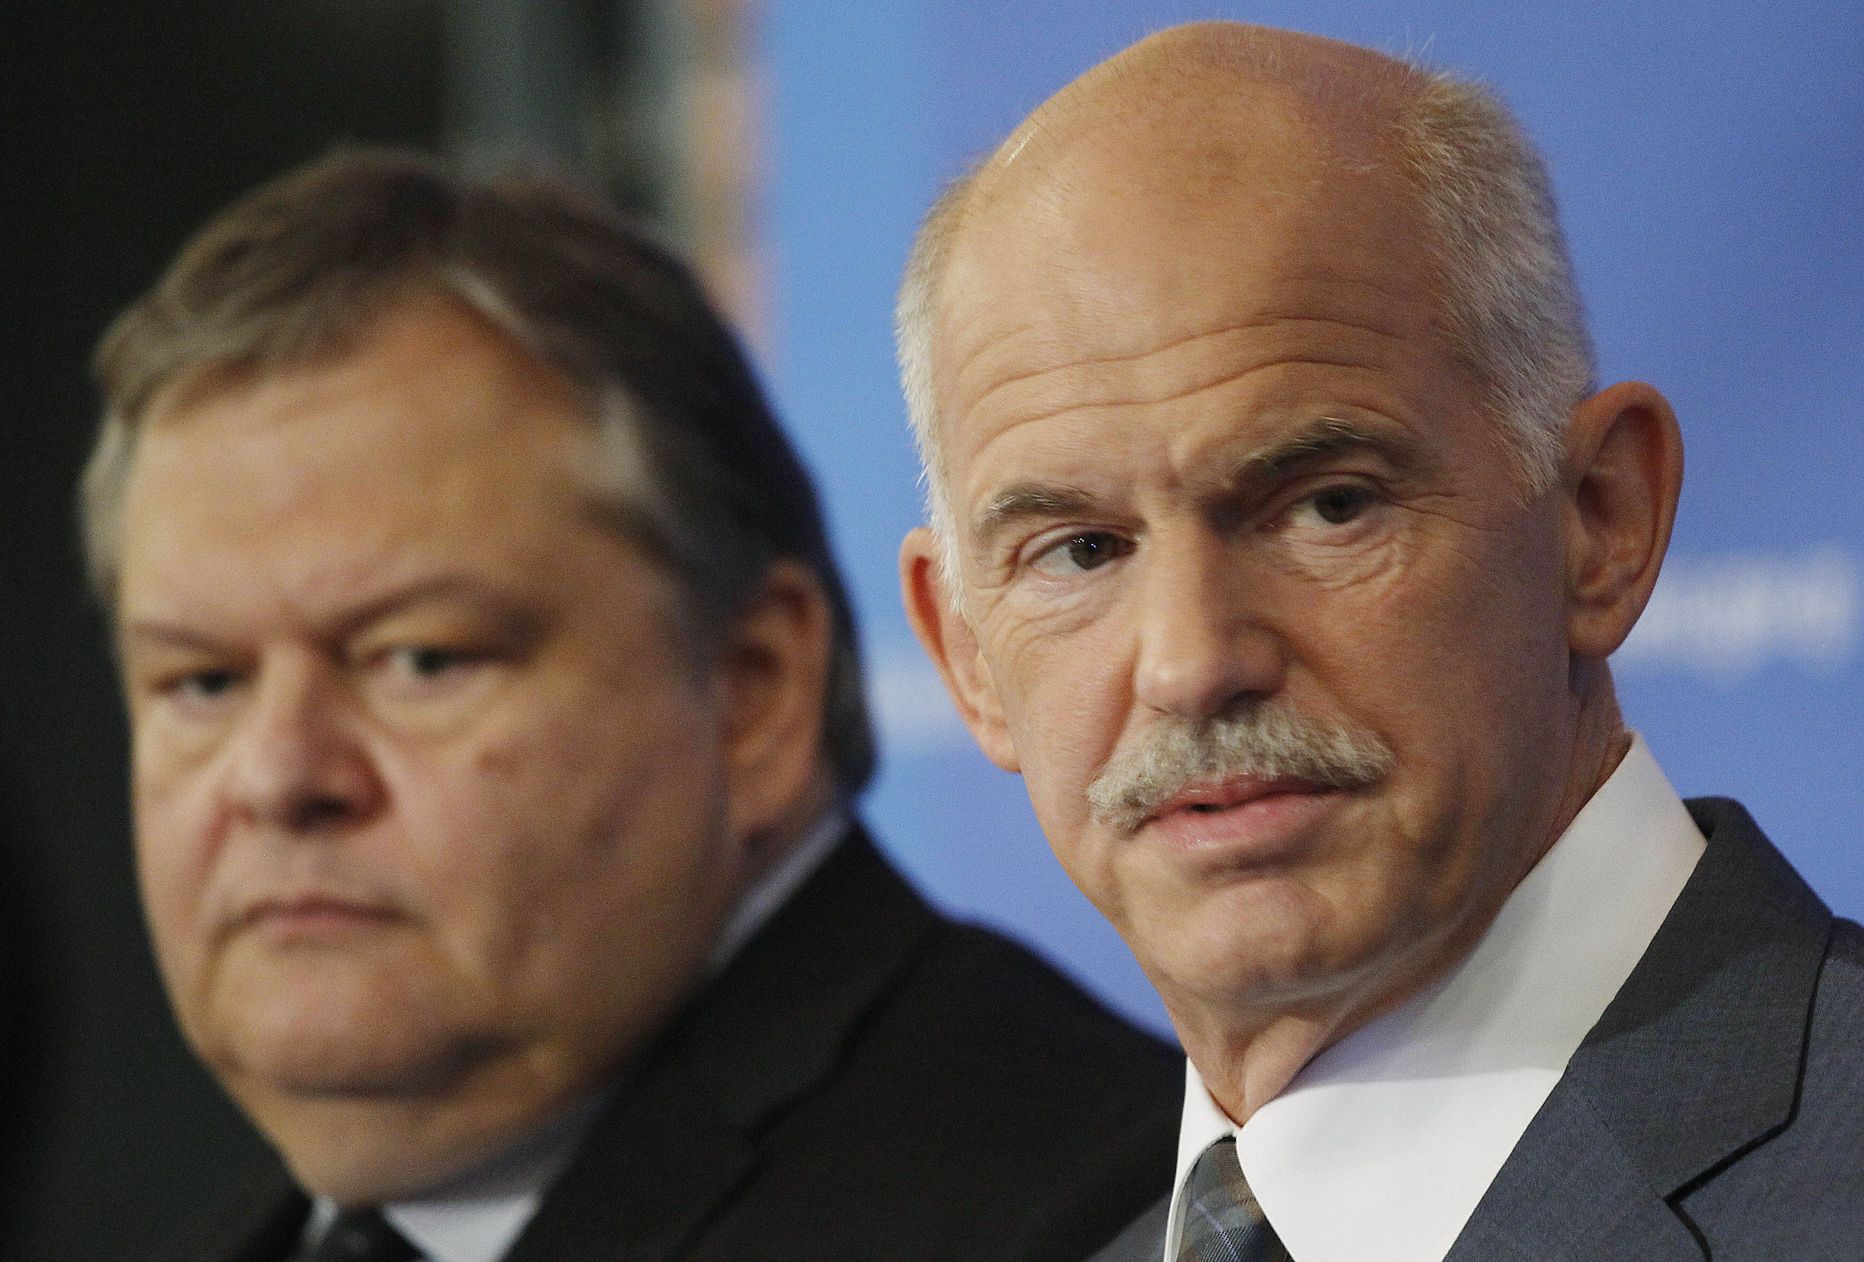 Kreeka peaminister Georgis Papandreou (paremal) ja rahandusminister Evangelos Venizelos.